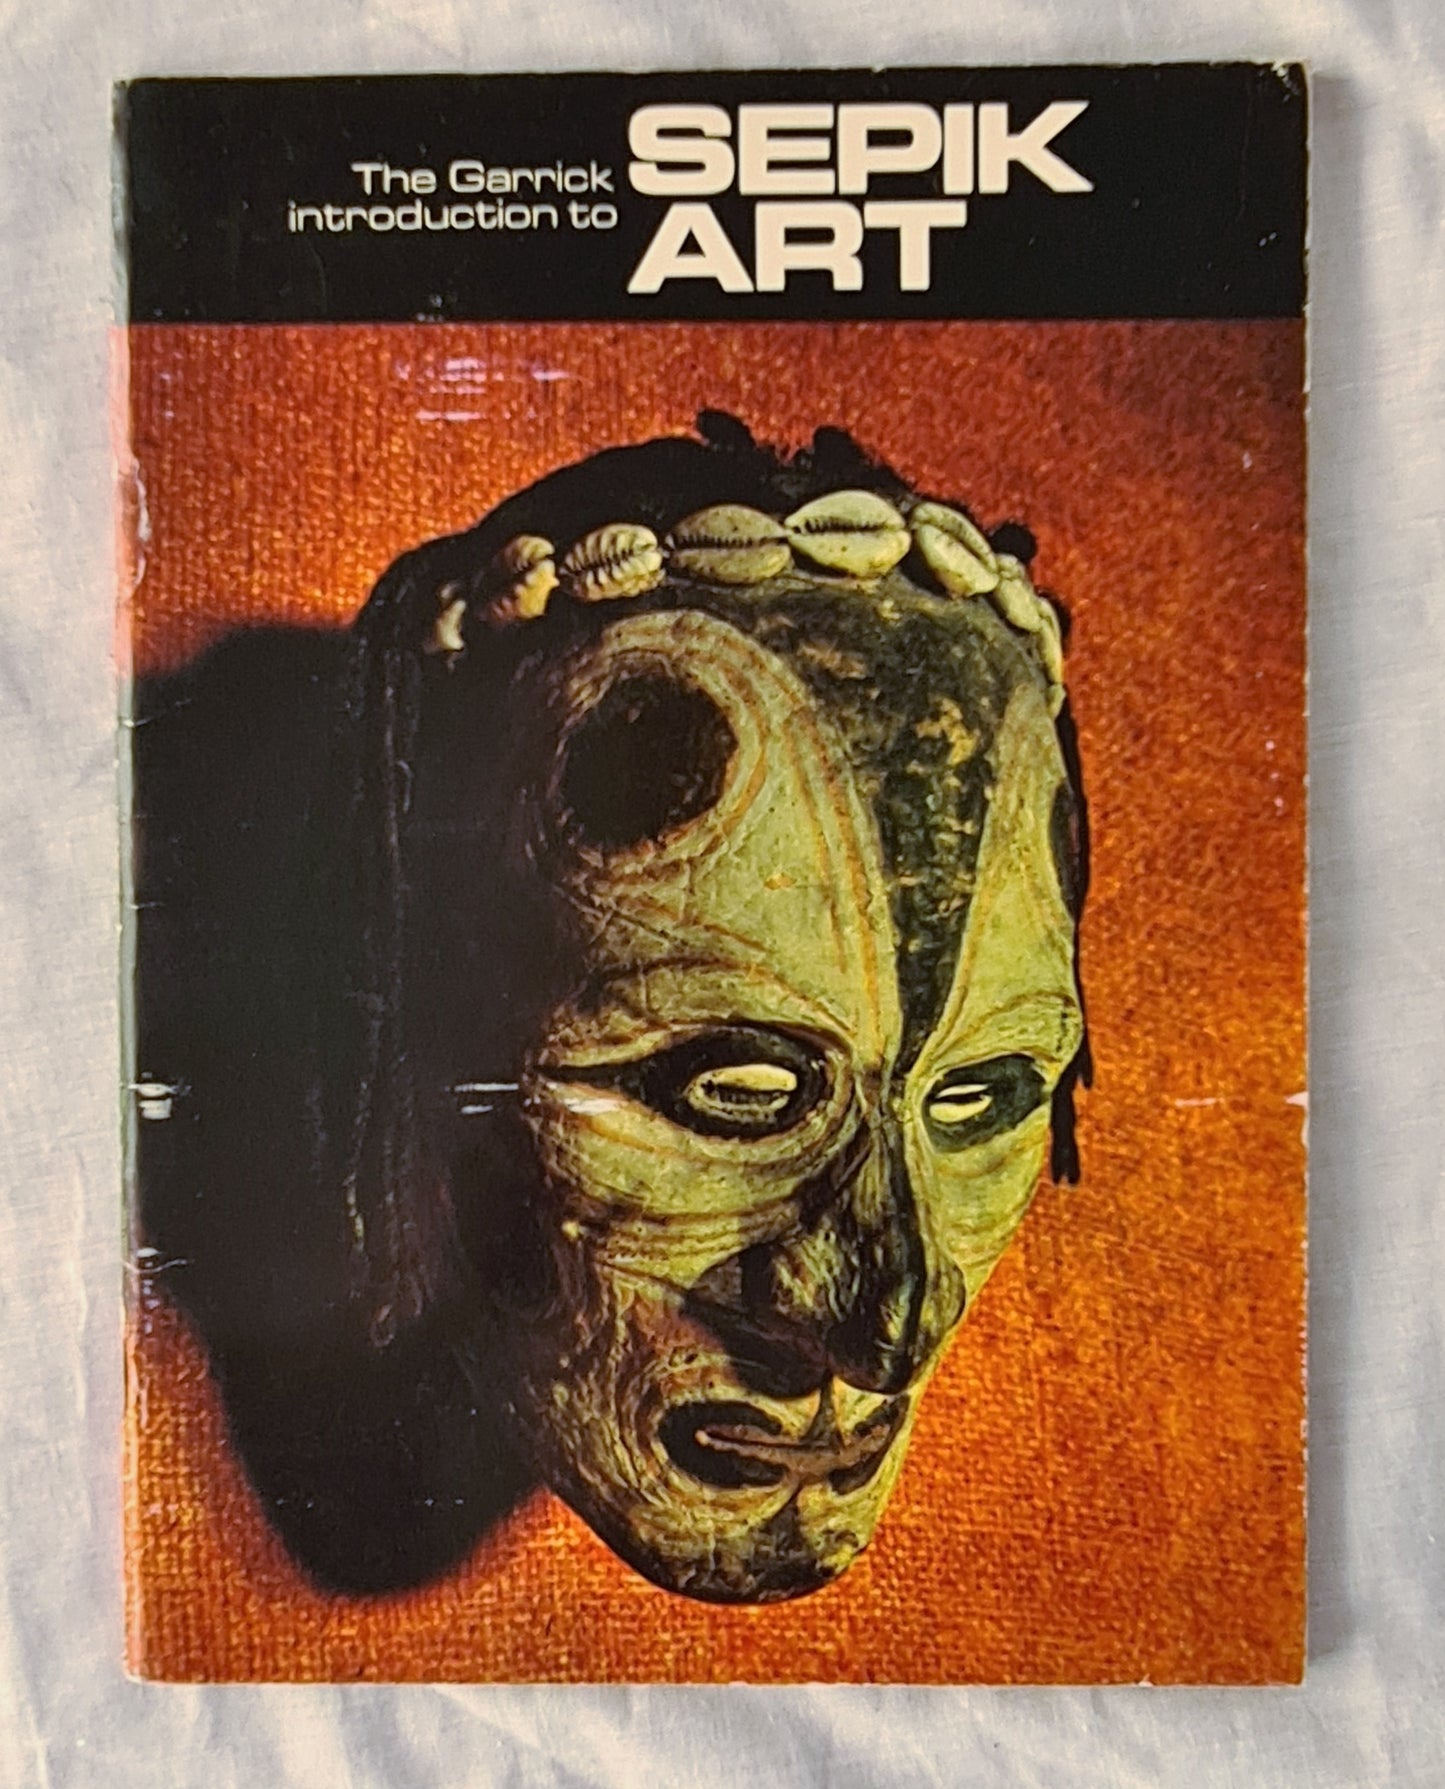 Sepik Art  The Garrick introduction to  Edited by Gloria Stewart